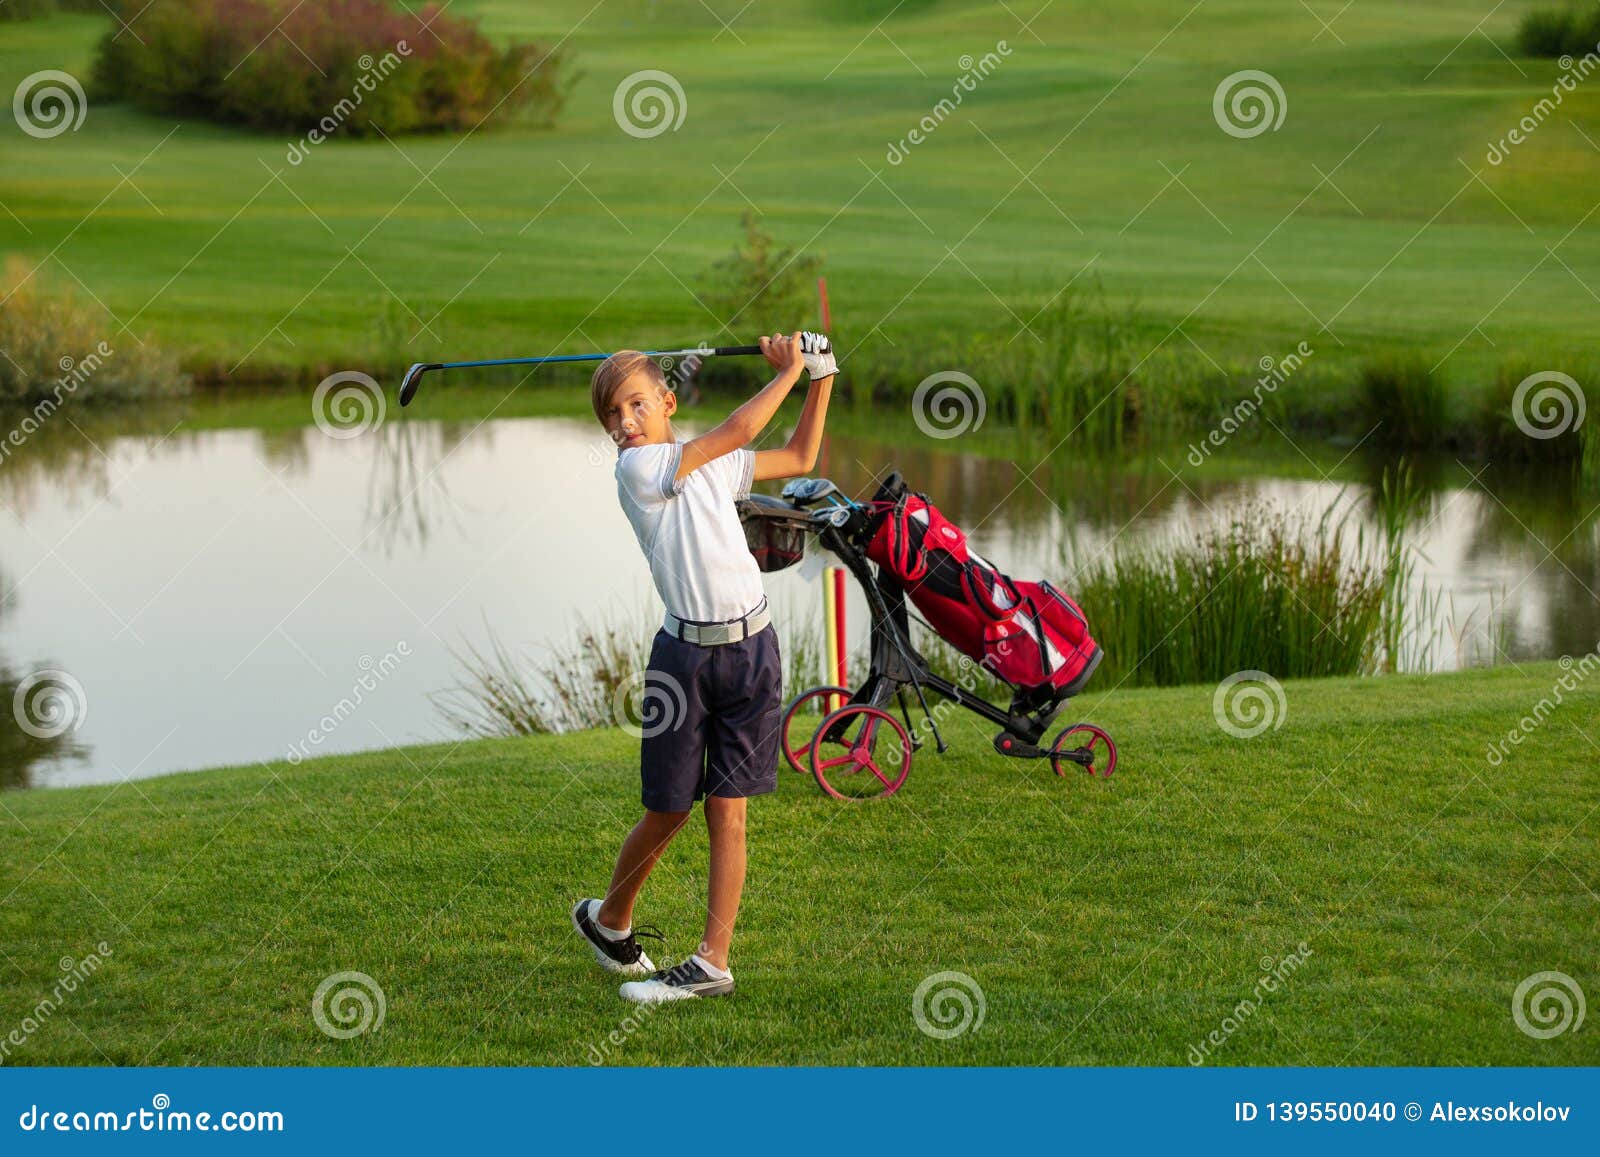 11 years old boy golfer playing golf near a lake. 11 years old boy golfer is hitting on golf course near a lake